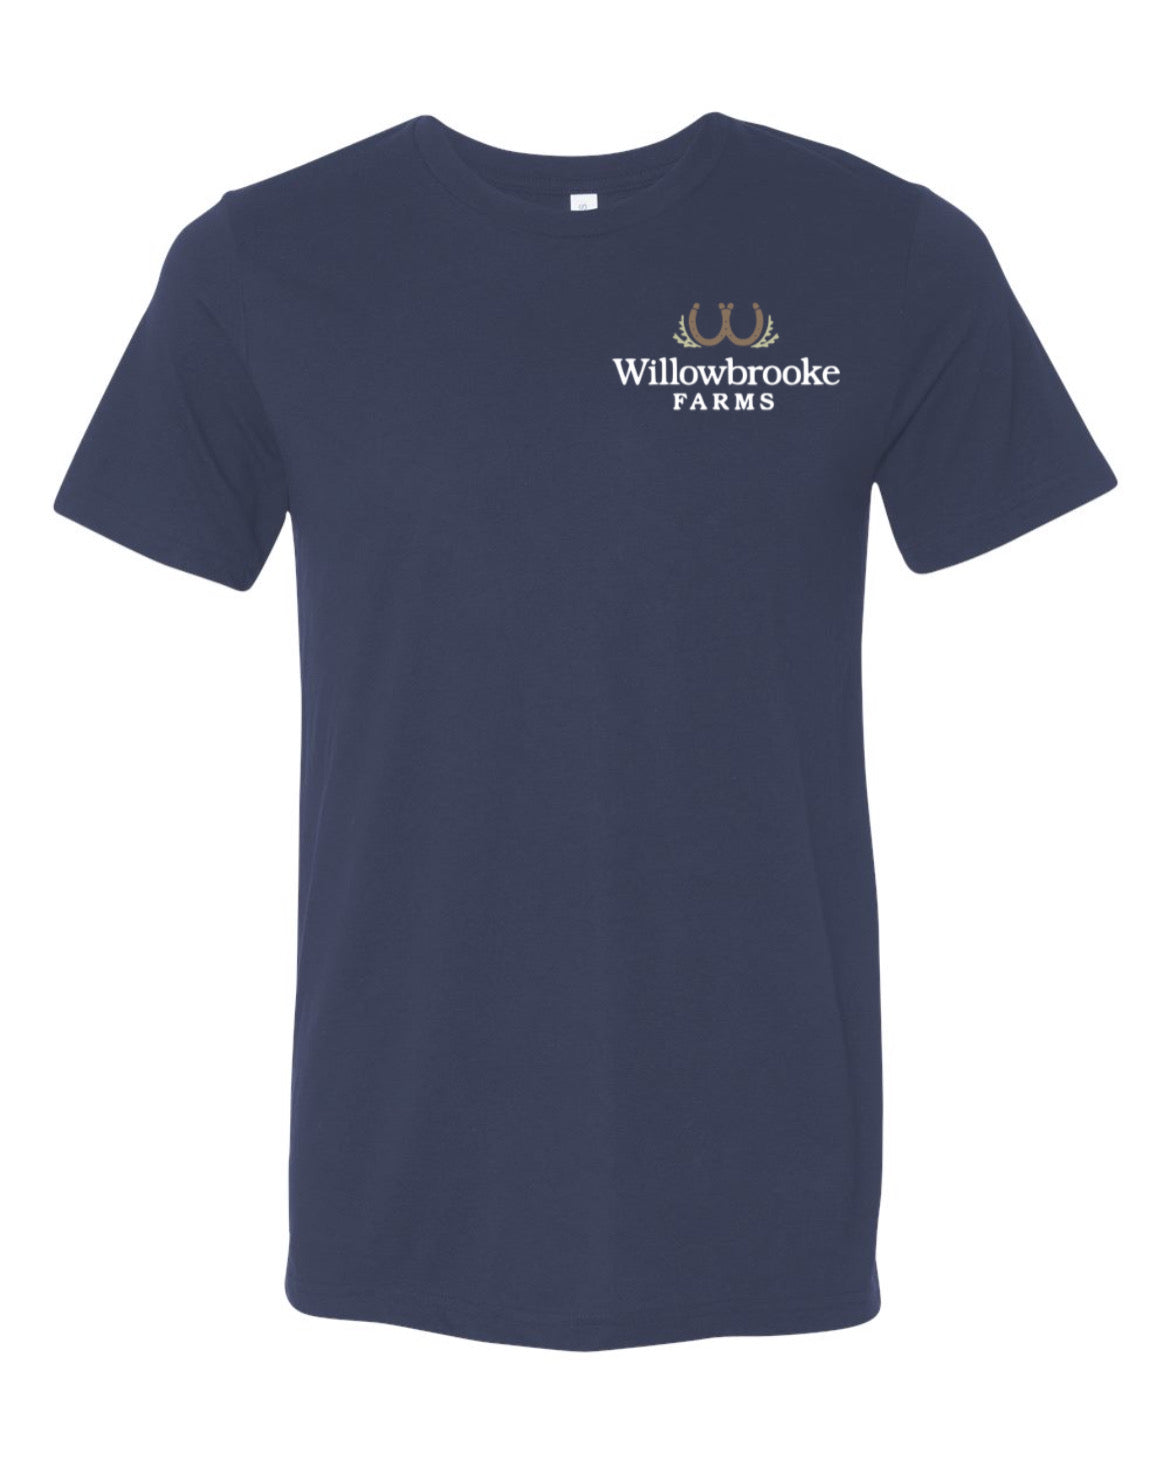 Willowbrooke Farms T-shirt